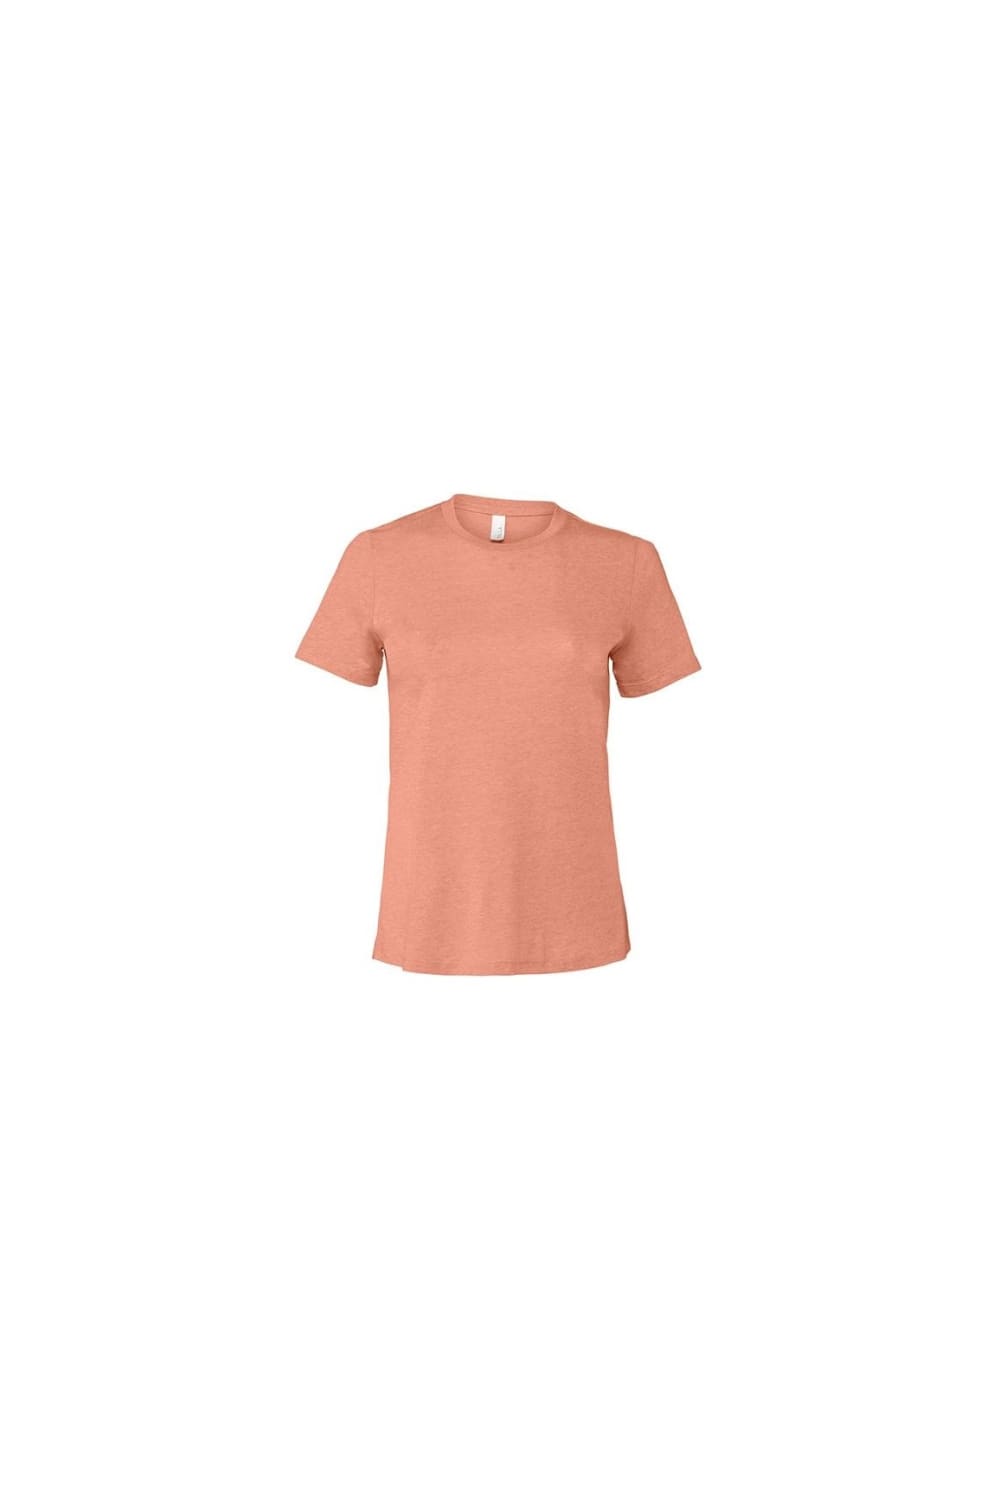 Bella + Canvas Womens/Ladies Jersey Short-Sleeved T-Shirt (Heather Sunset)